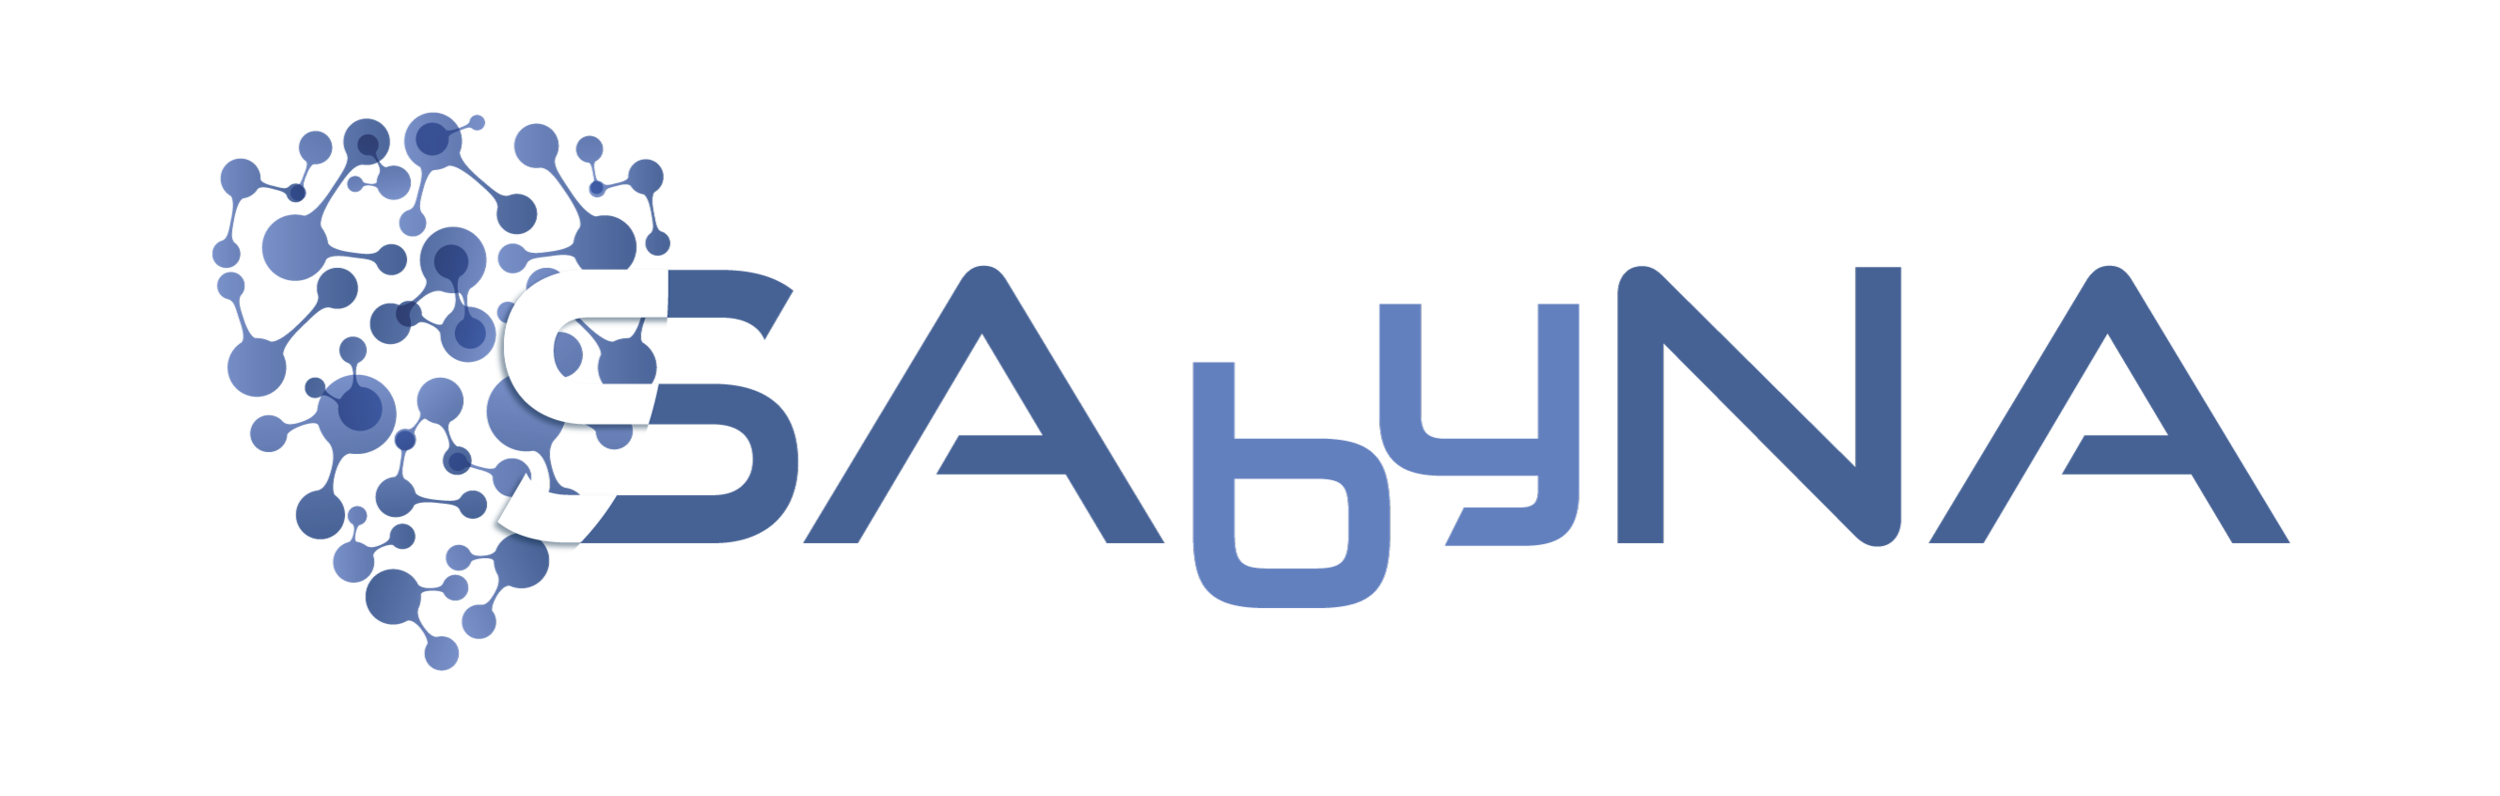 Logo-Sabyna-S-blanca.png